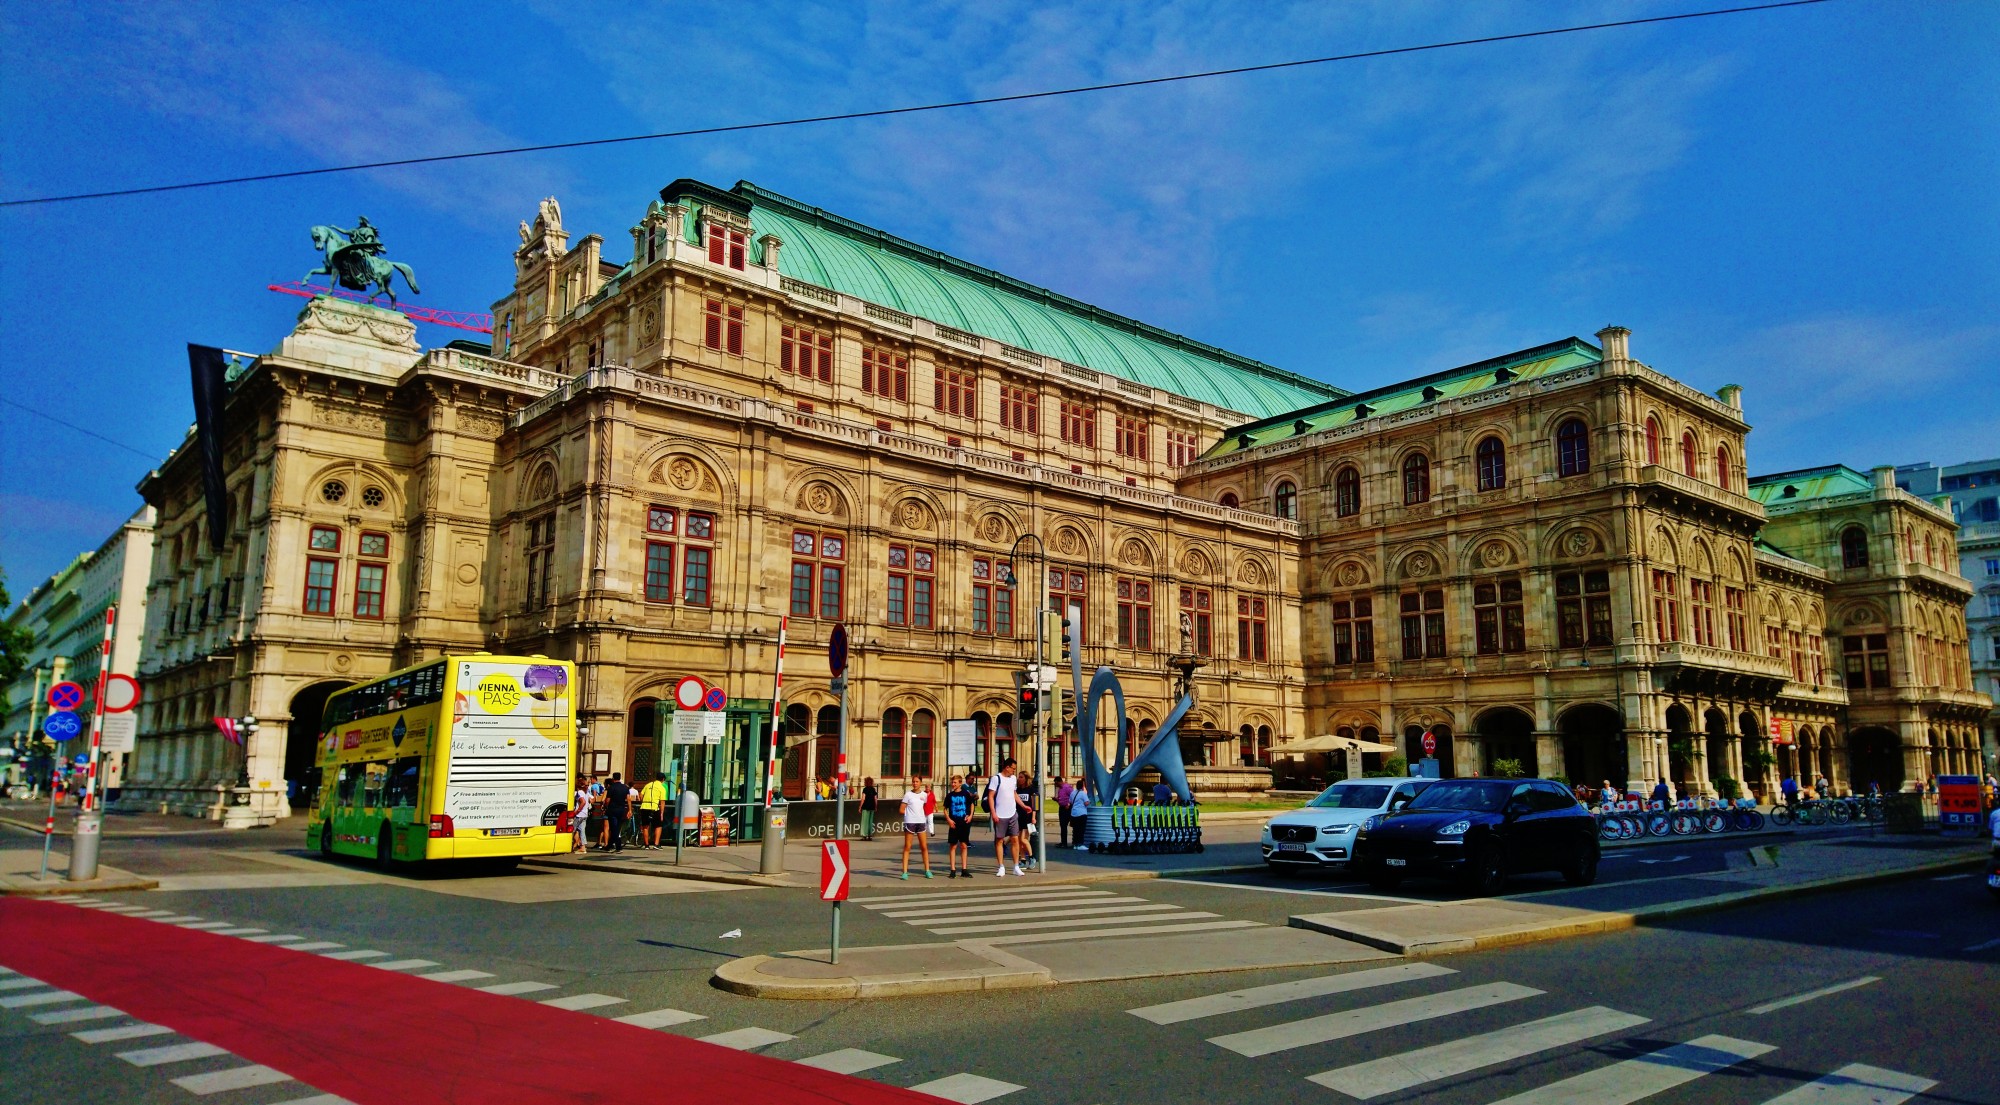 Foto: Wiener Staatsoper - Wien (Vienna), Austria